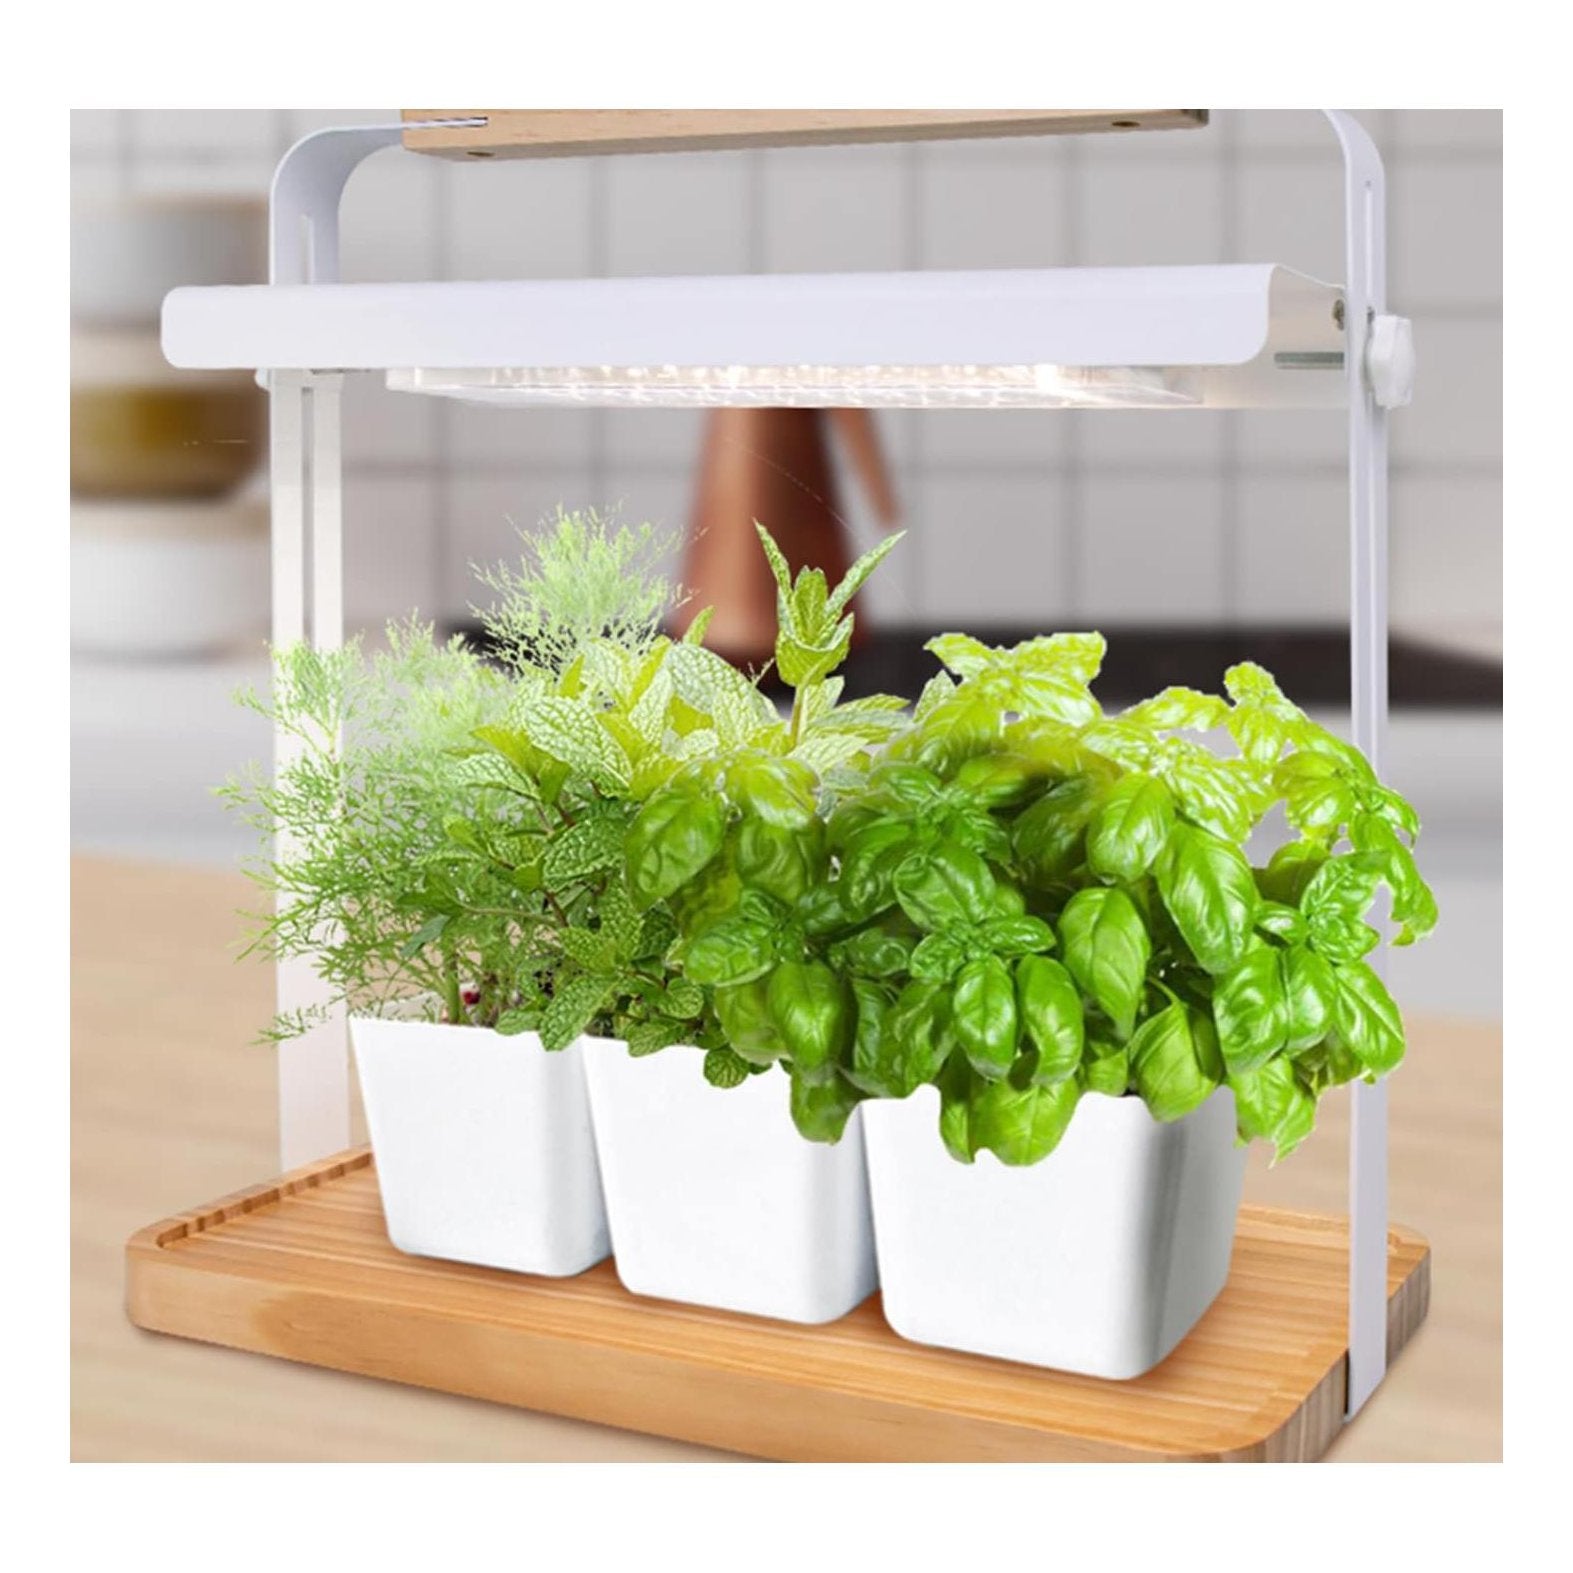 Wooden Minigarden kit smart with led grow light